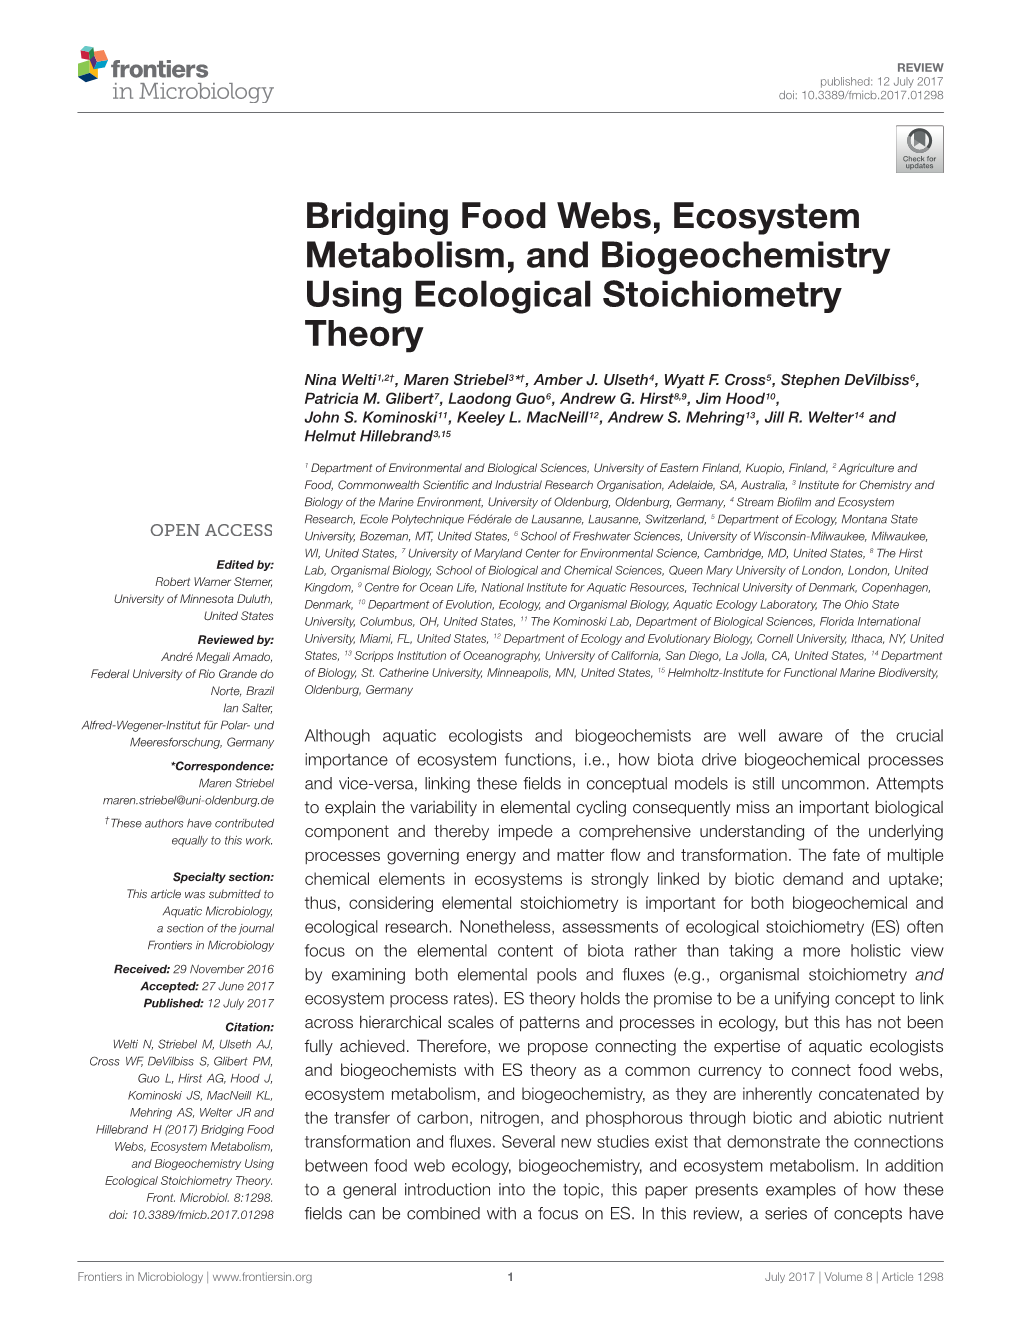 Bridging Food Webs, Ecosystem Metabolism, and Biogeochemistry Using Ecological Stoichiometry Theory